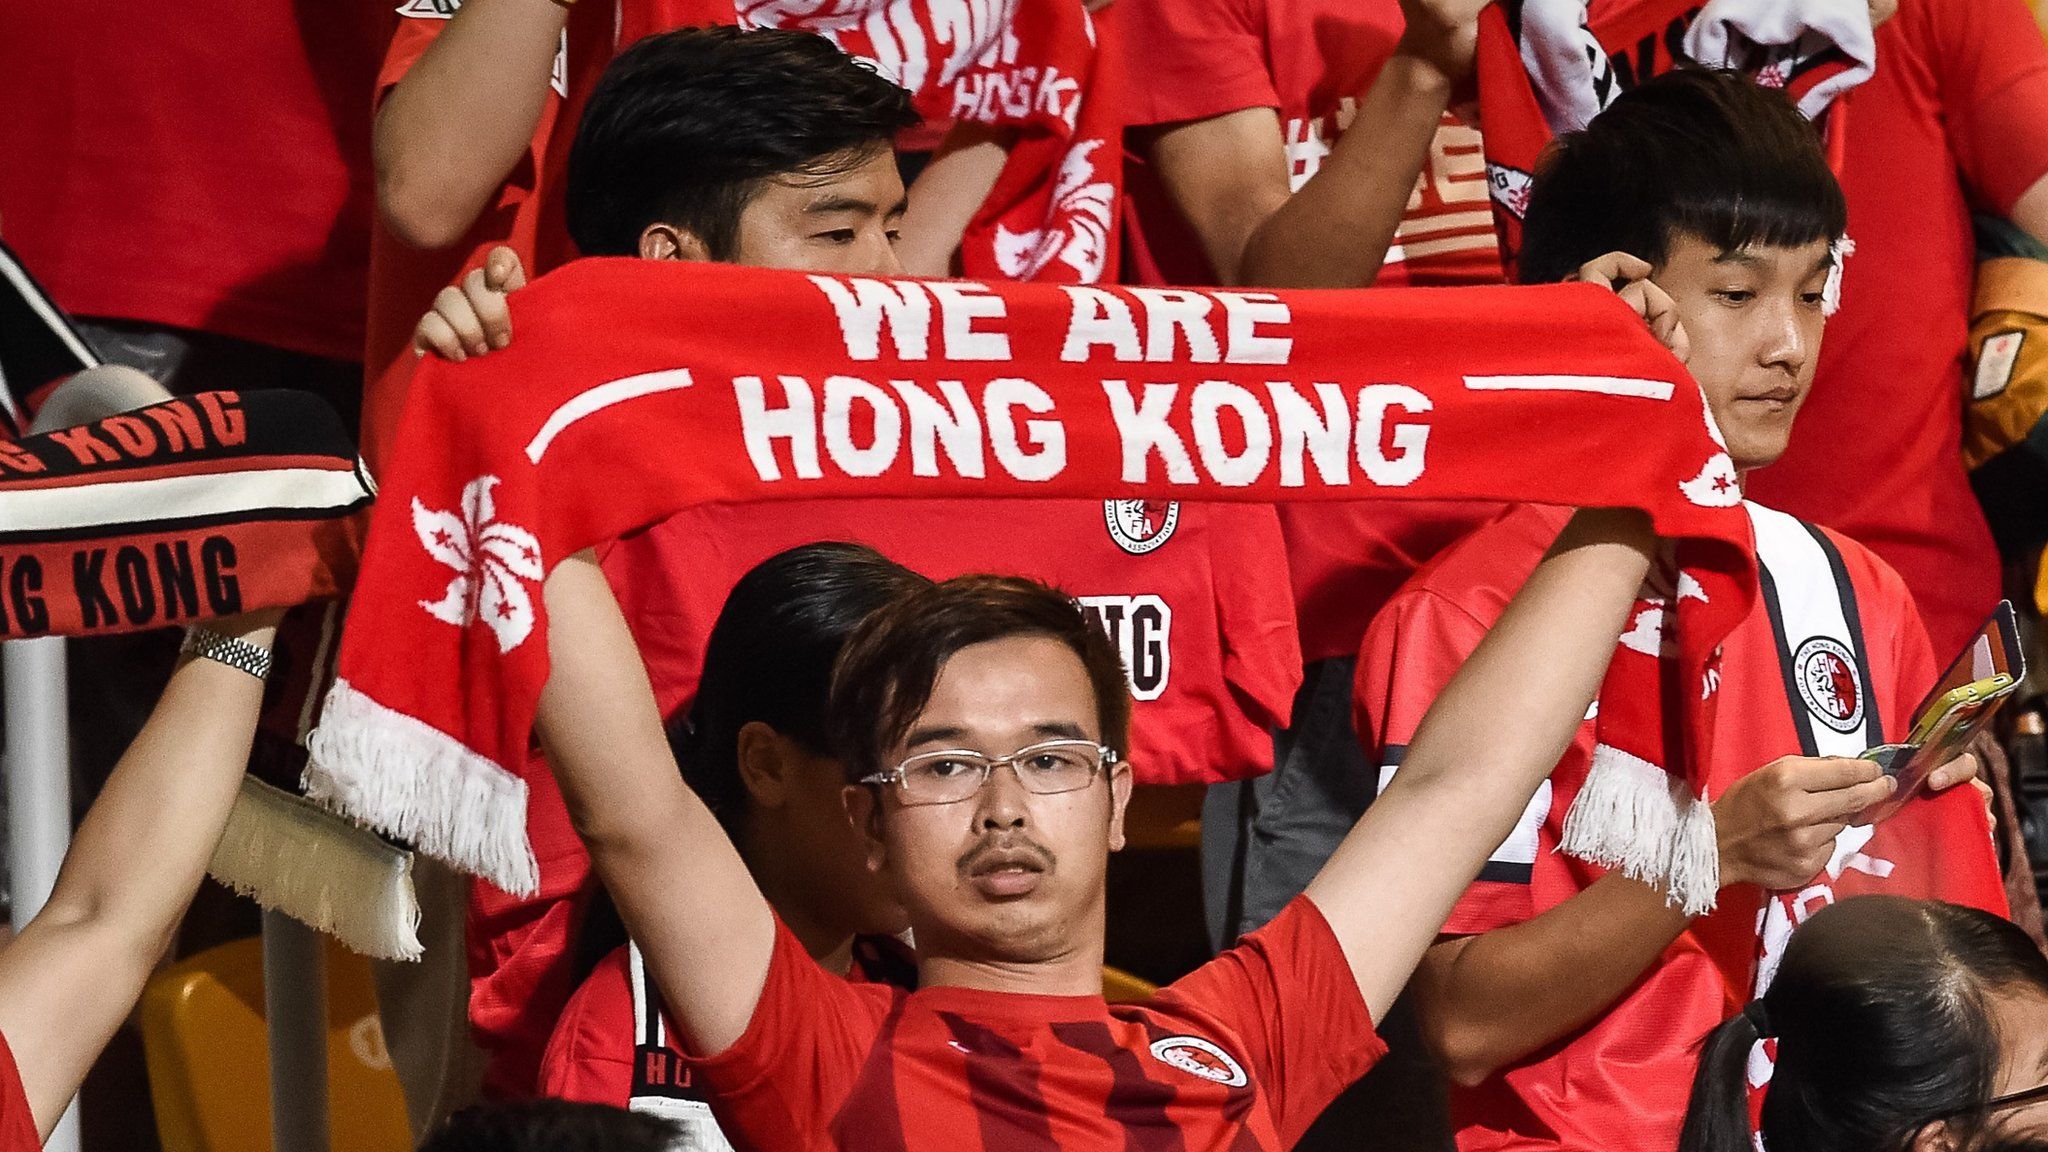 Hong Kong football fans during the 2018 World Cup qualifying match between Hong Kong and Qatar in September